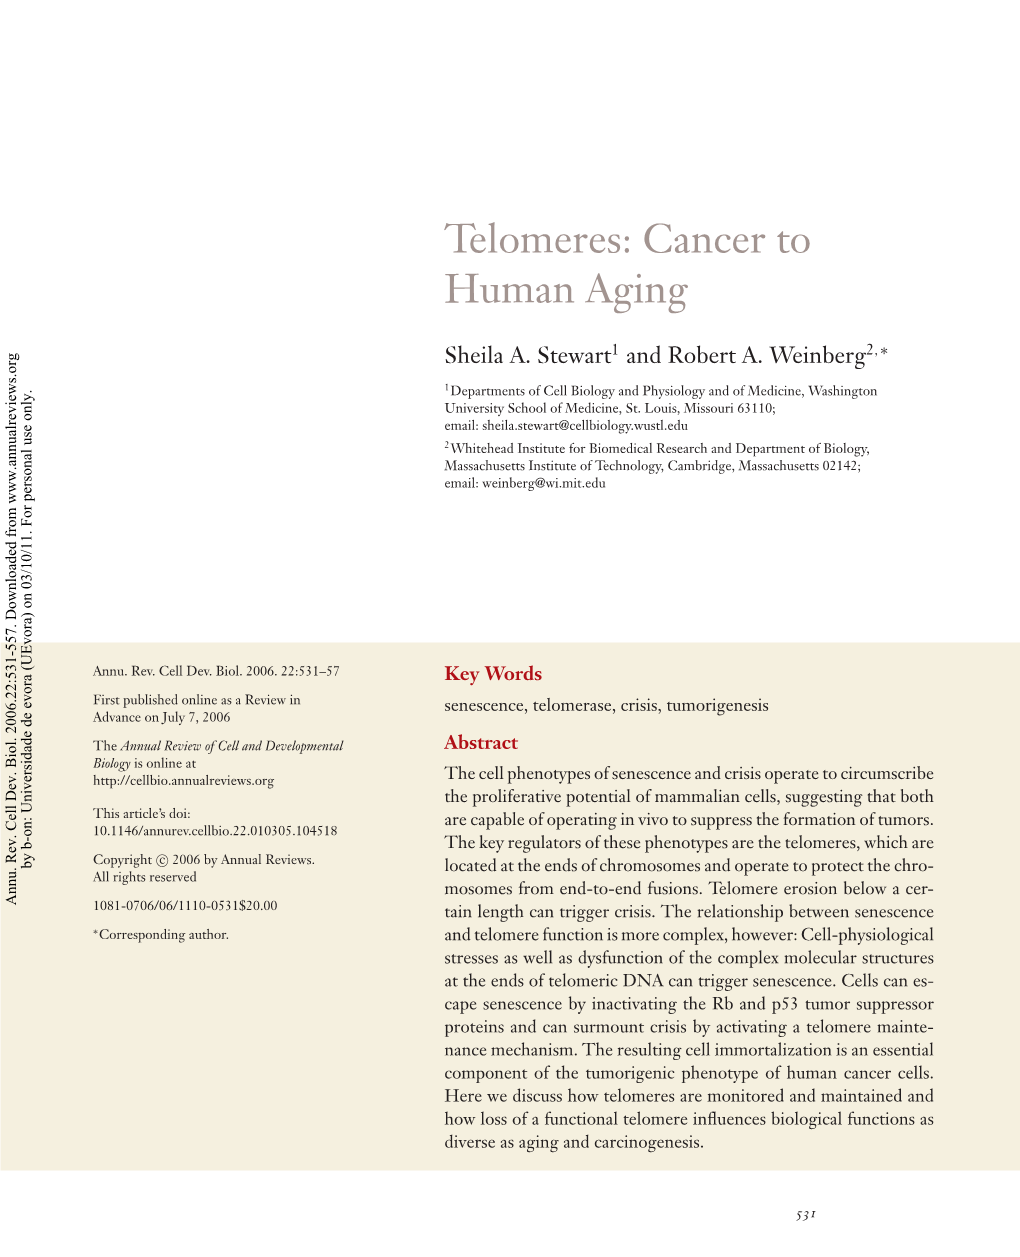 Telomeres: Cancer to Human Aging